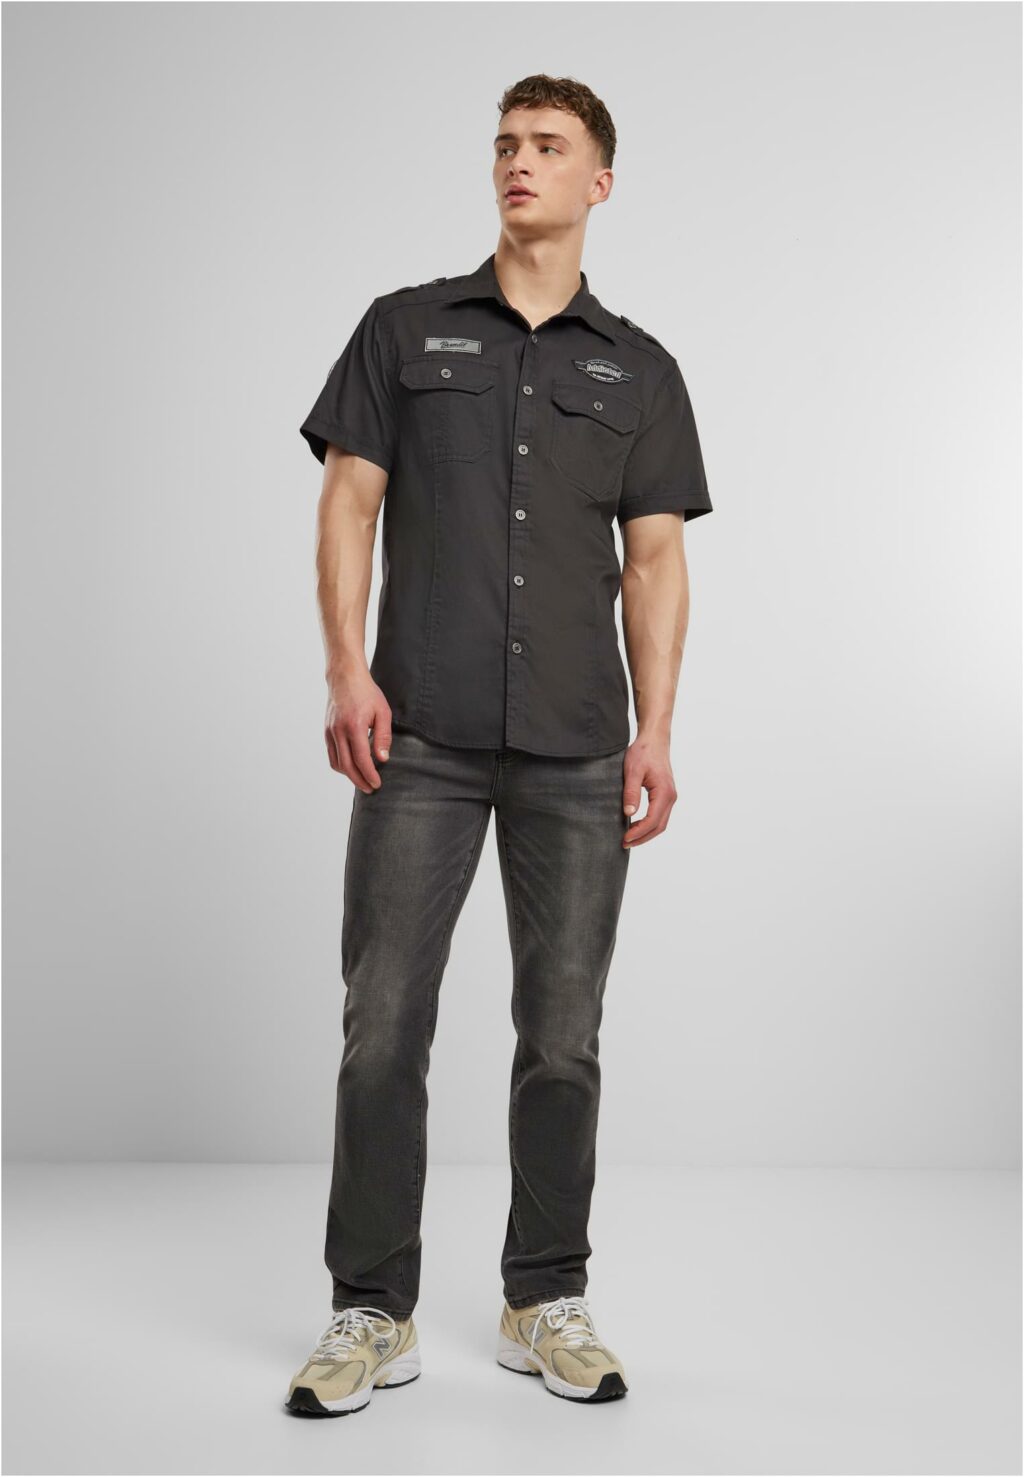 Brandit Luis Vintage Shirt Short Sleeve black BD4033